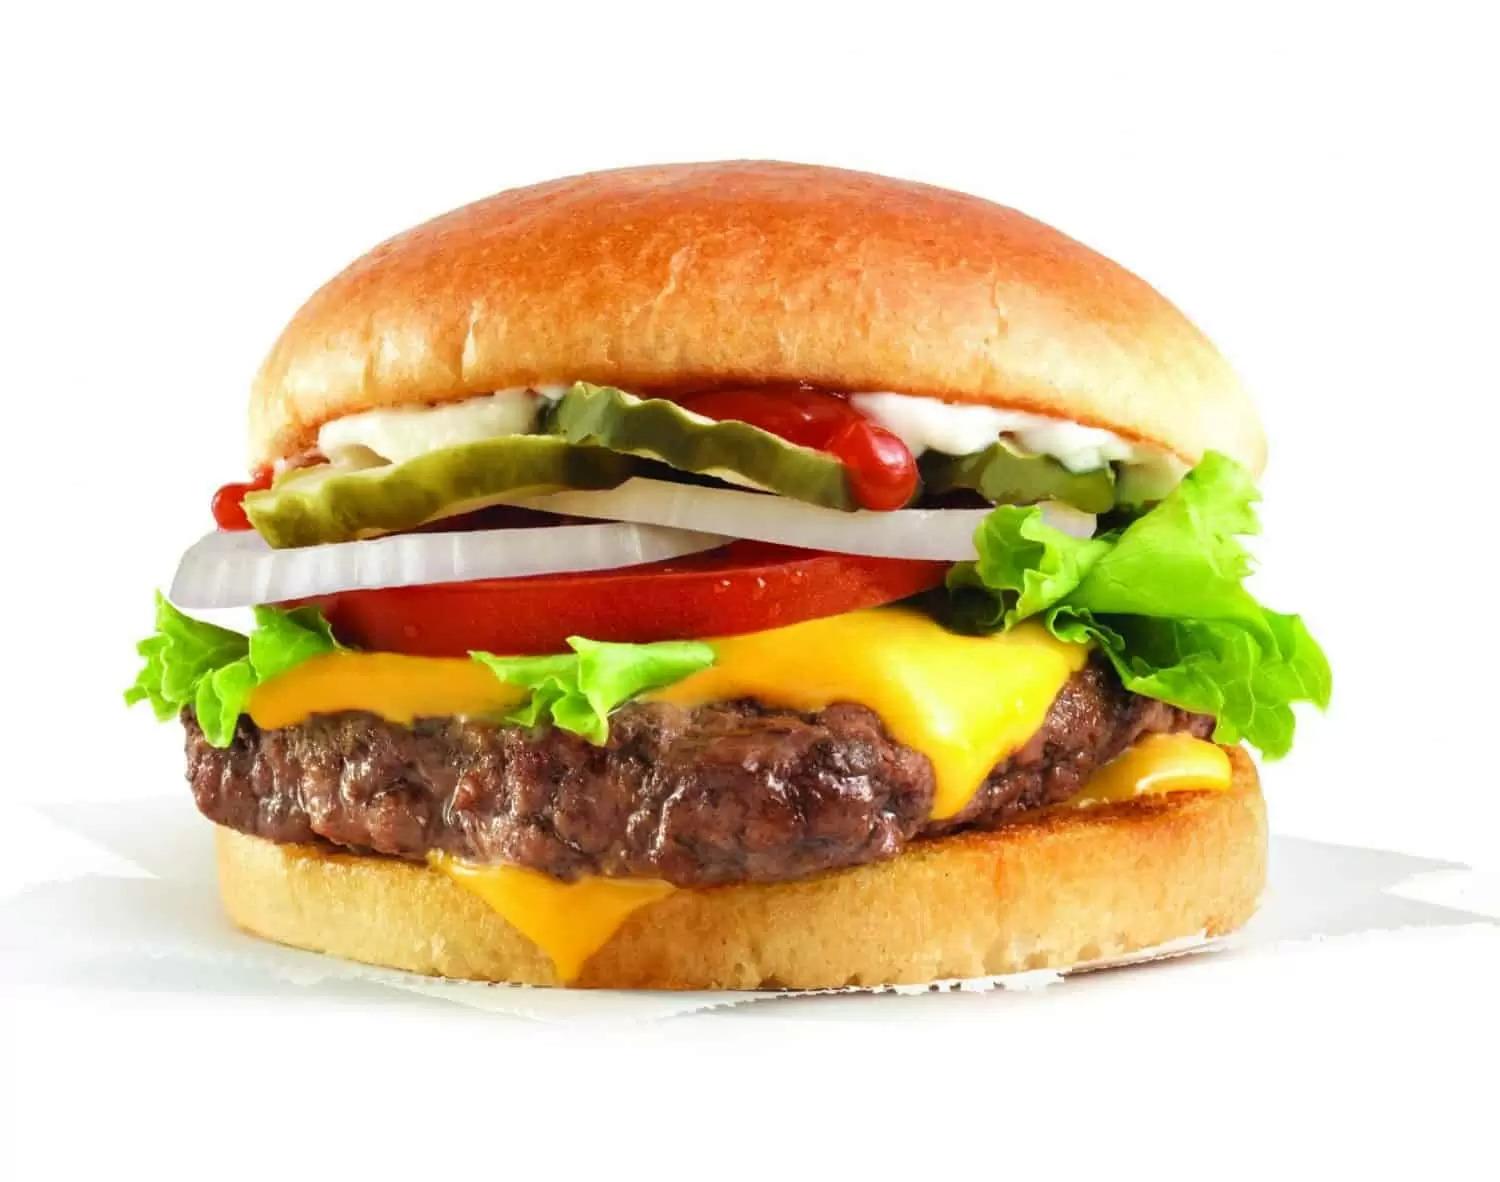 Wendys Daves Single Cheeseburger for $1